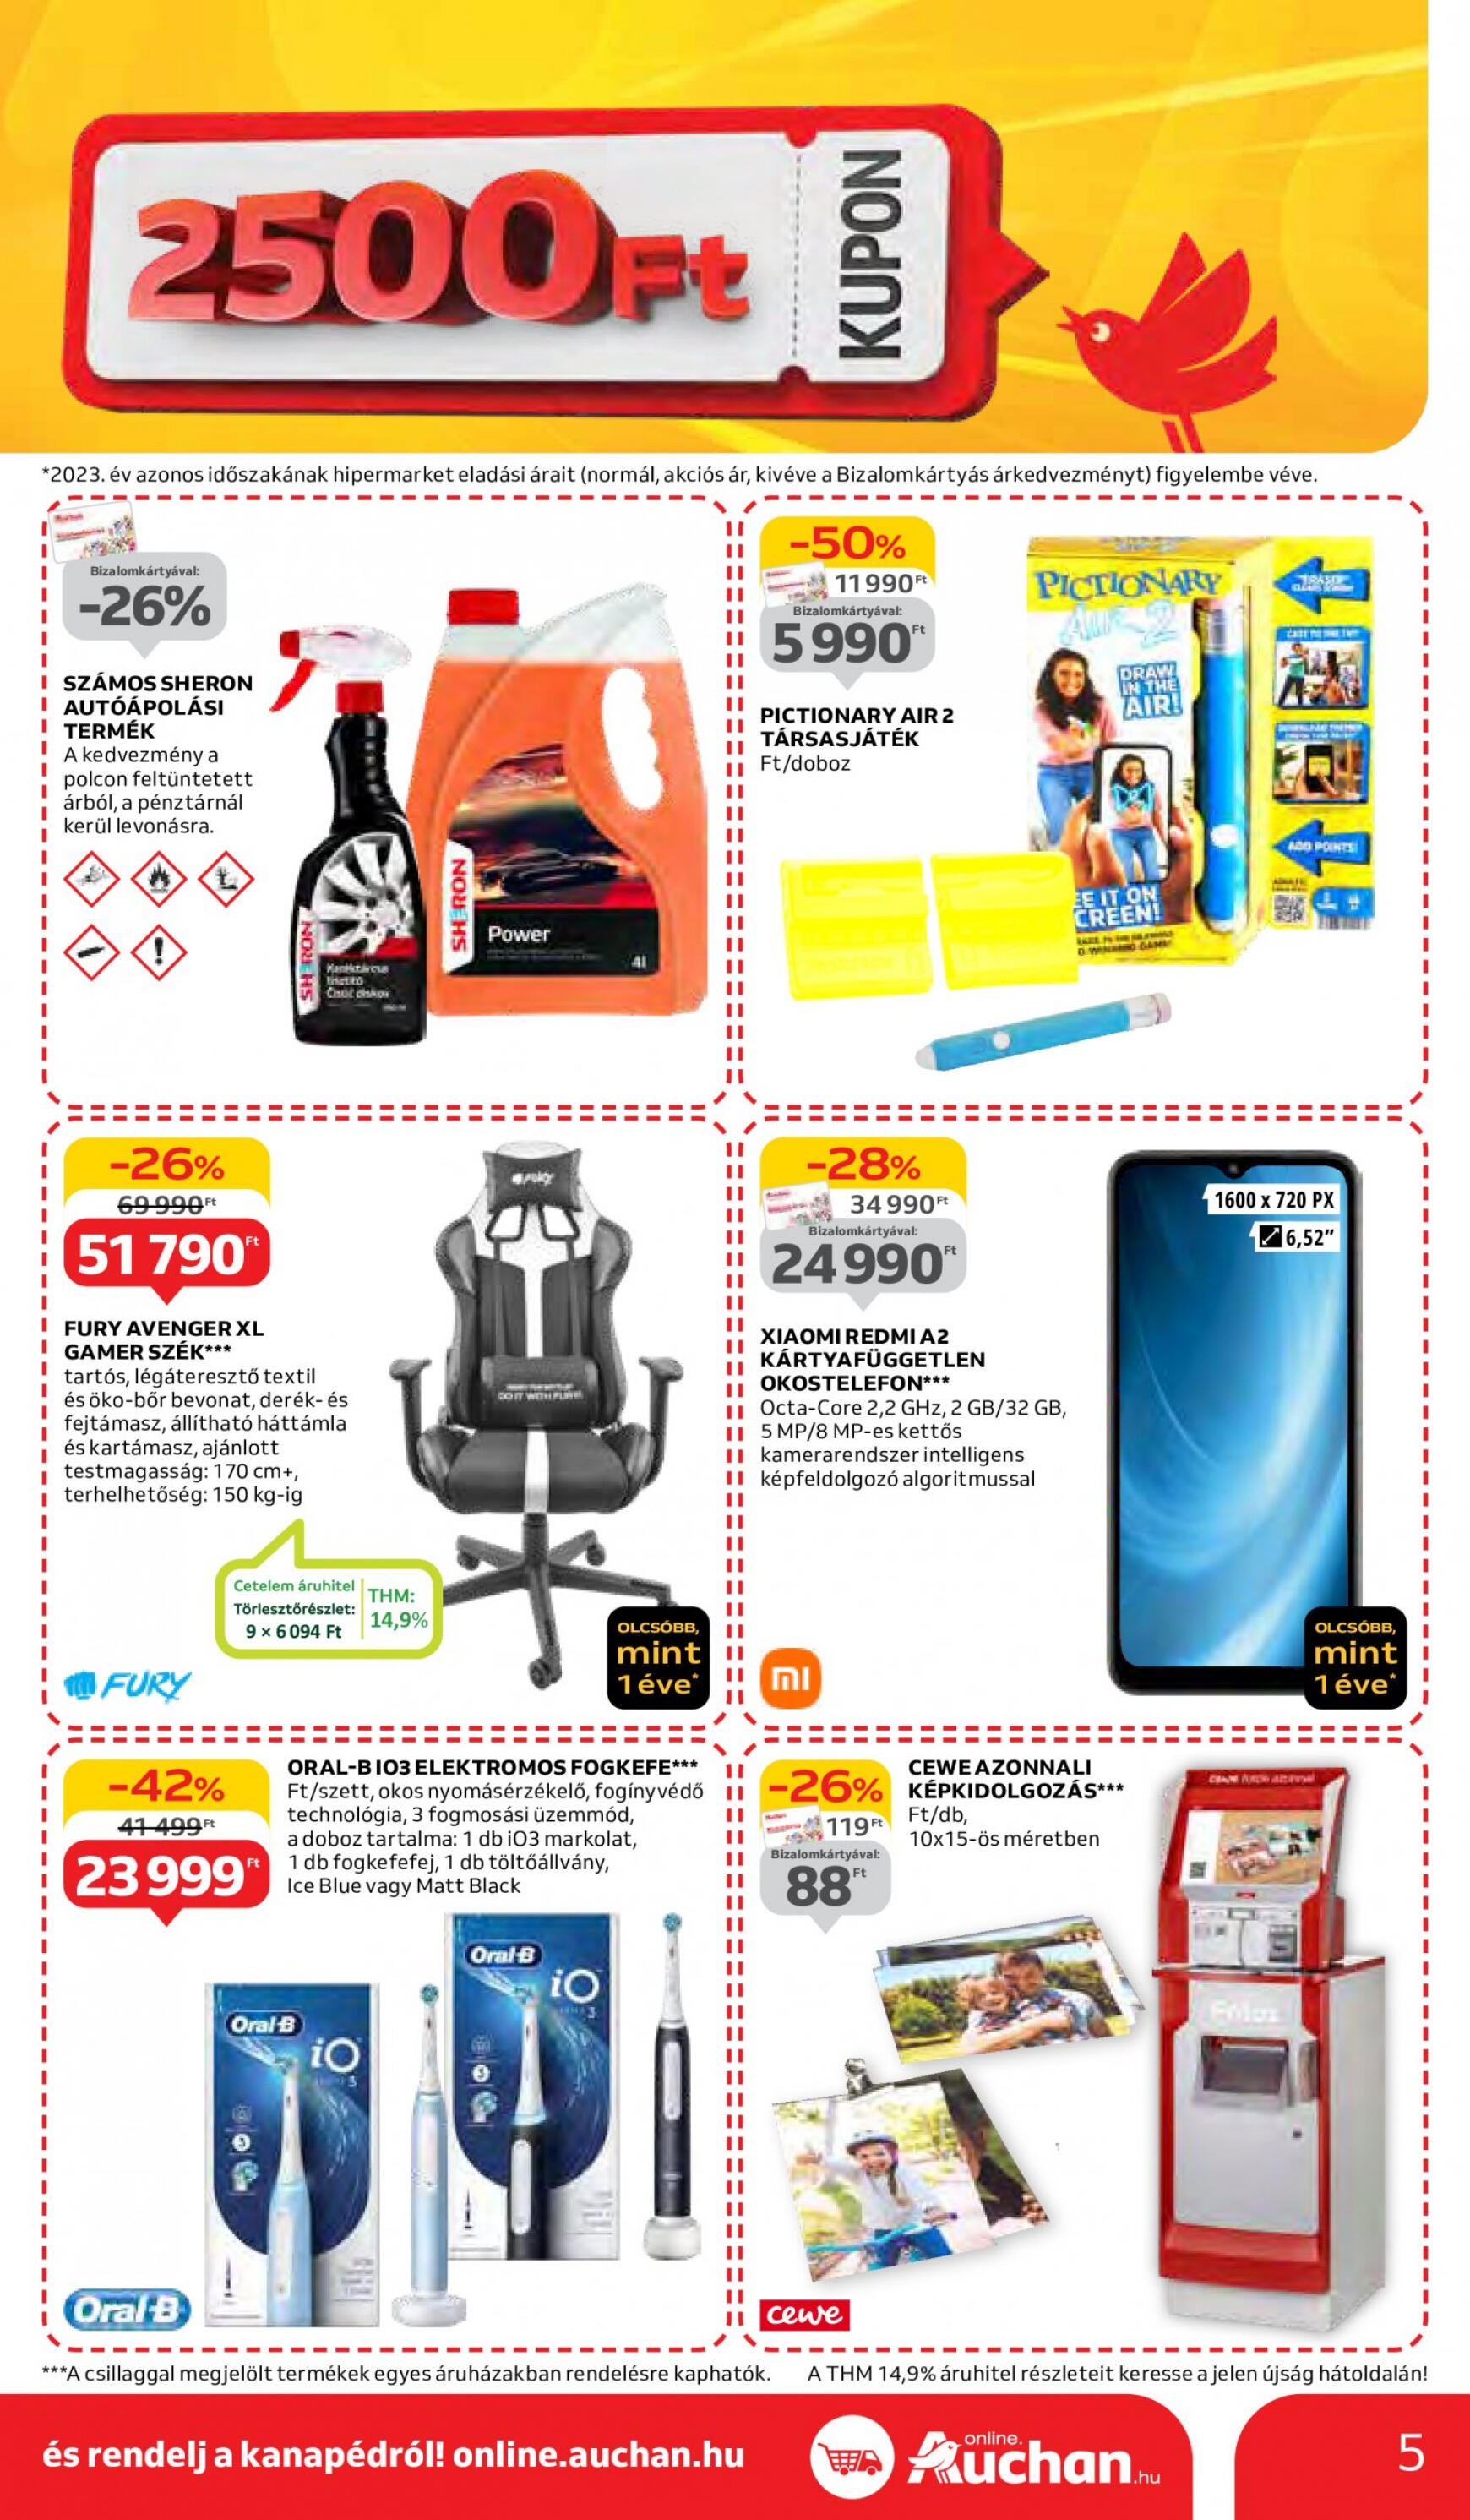 auchan - Aktuális újság Auchan 05.02. - 05.08. - page: 5